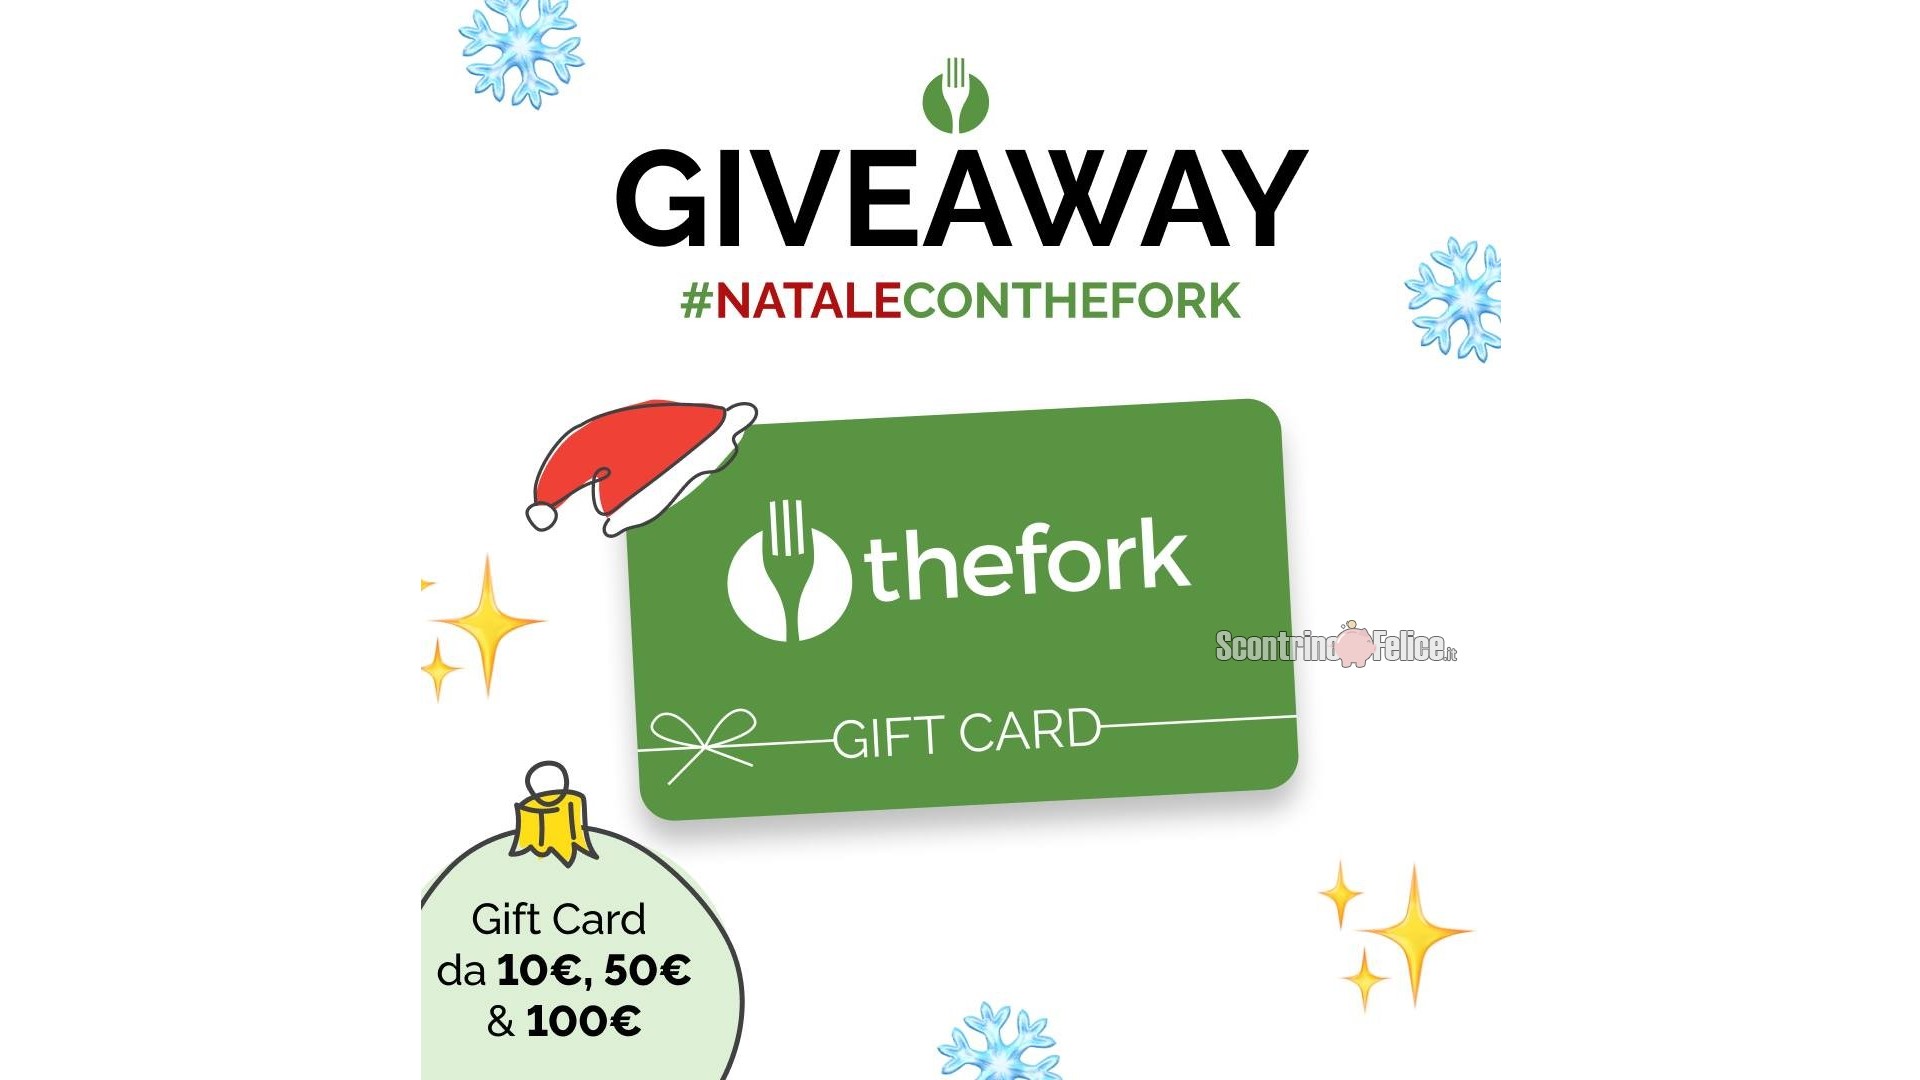 Giveaway The Fork: vinci gift card da 10€, 50€ e 100€